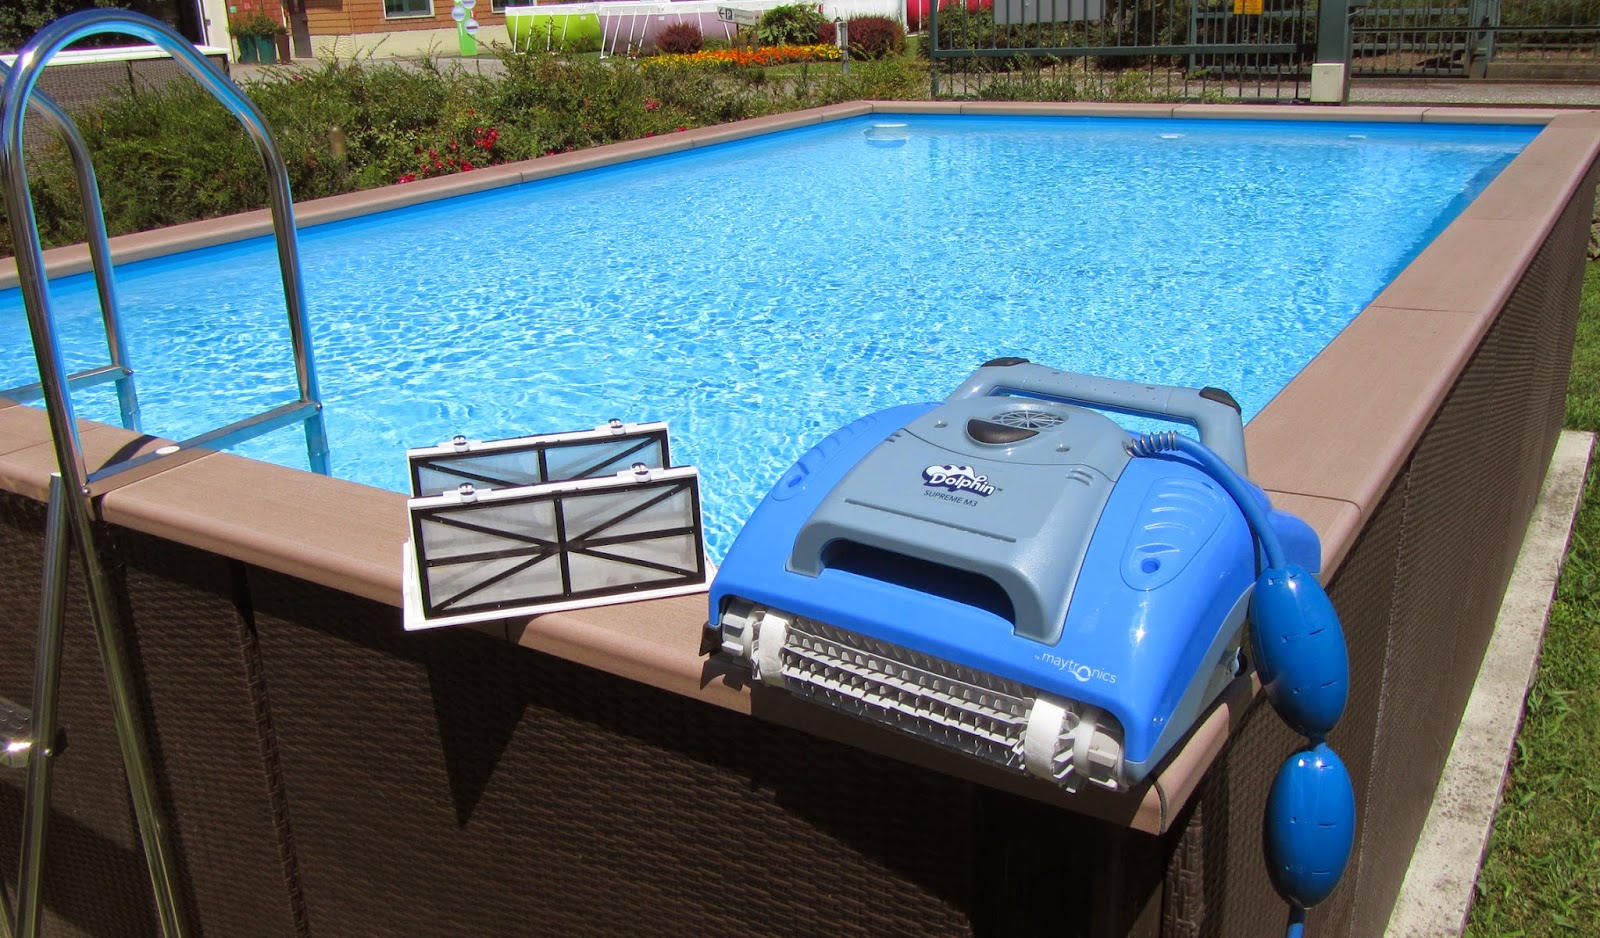 IMPEC PISCINE e SALI dal 1988, pulitori automatici per piscine